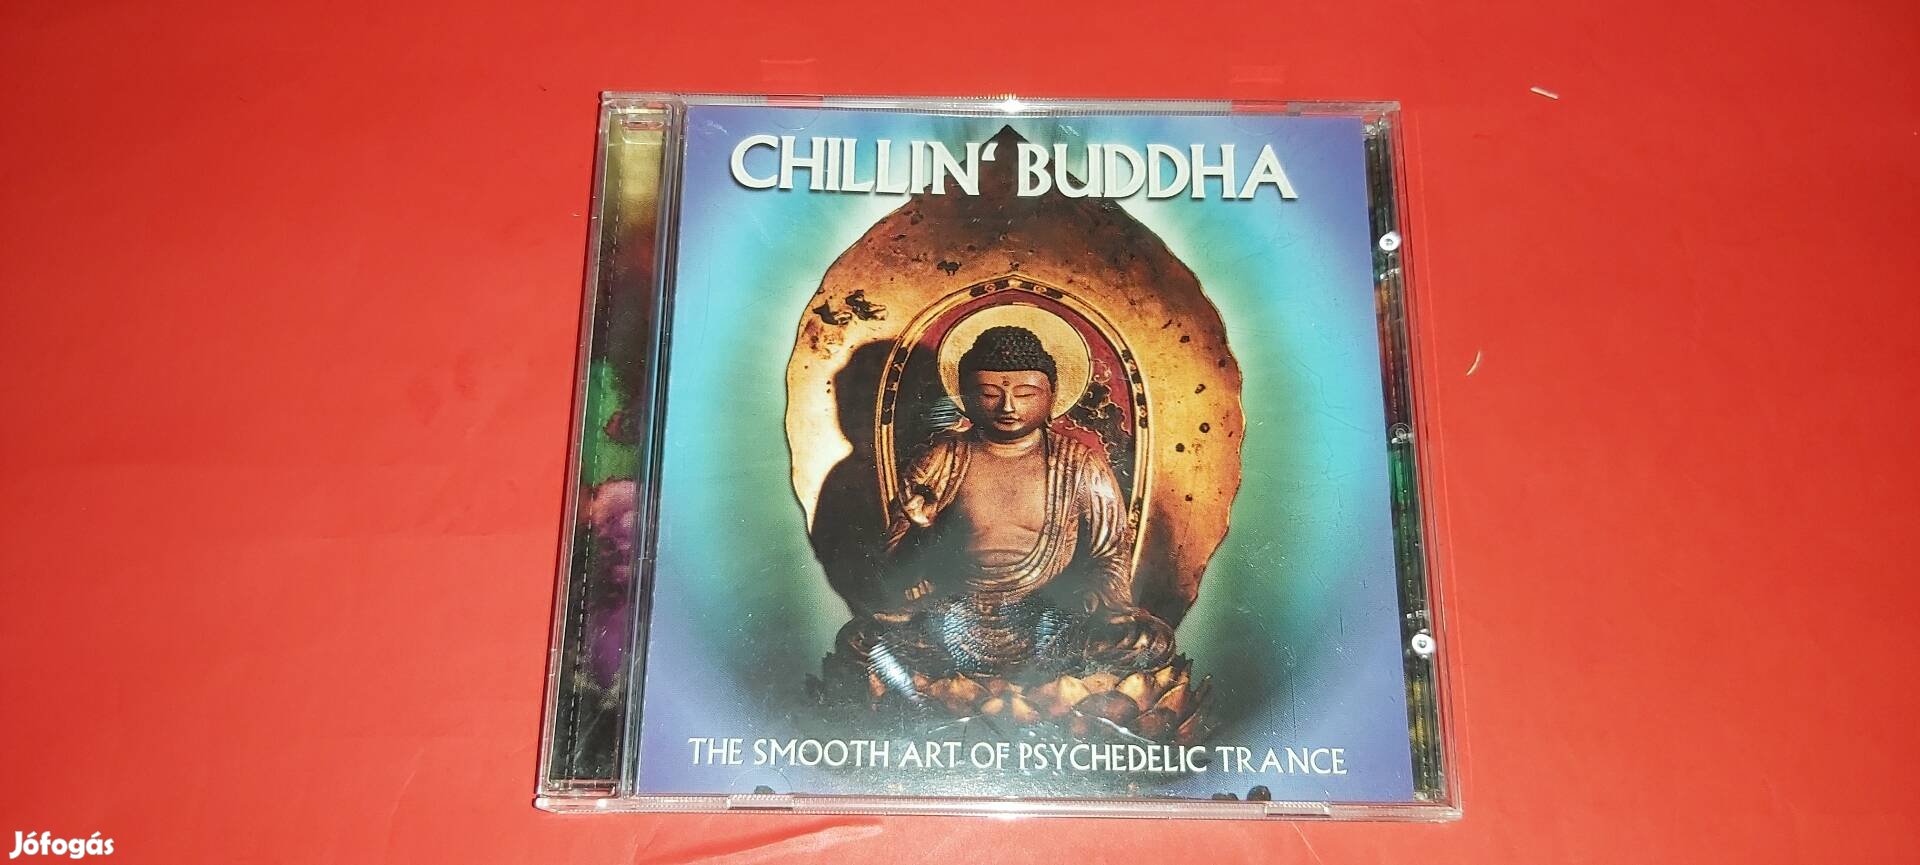 Chillin Buddha Psychedelic Trance Cd 2002